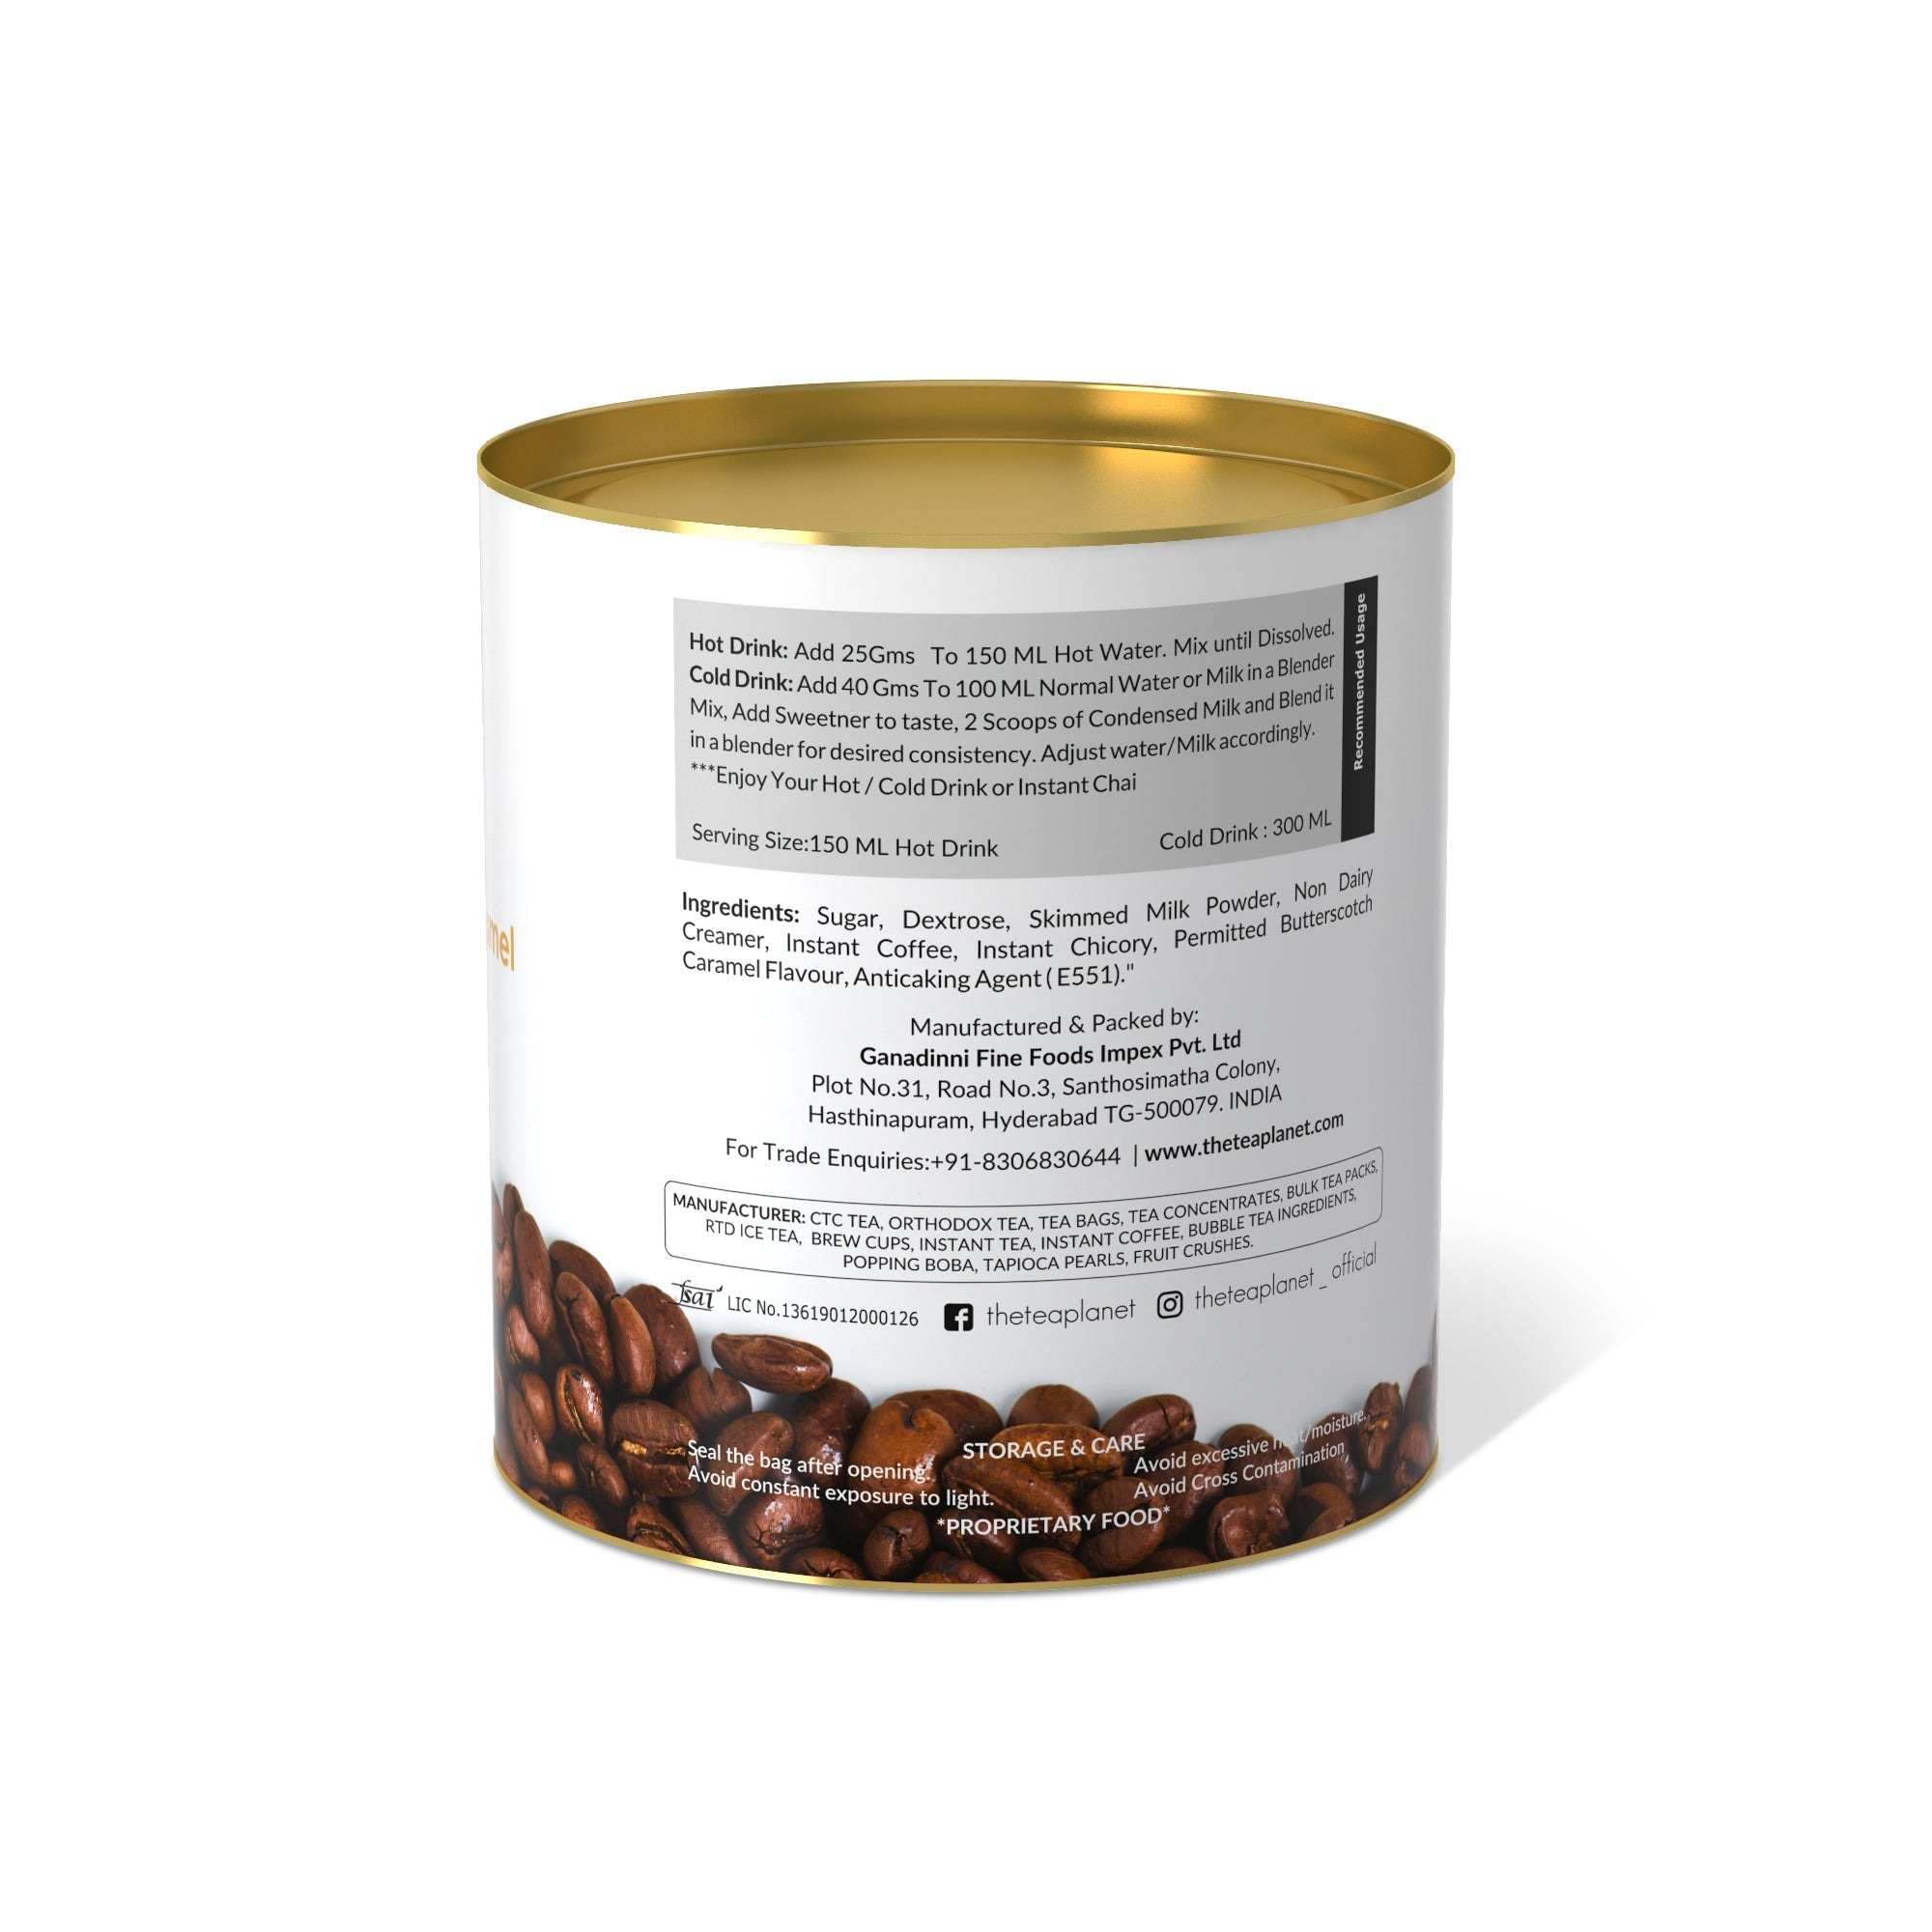 Butterscotch Instant Caramel Coffee Premix (3 in 1) - 800 gms